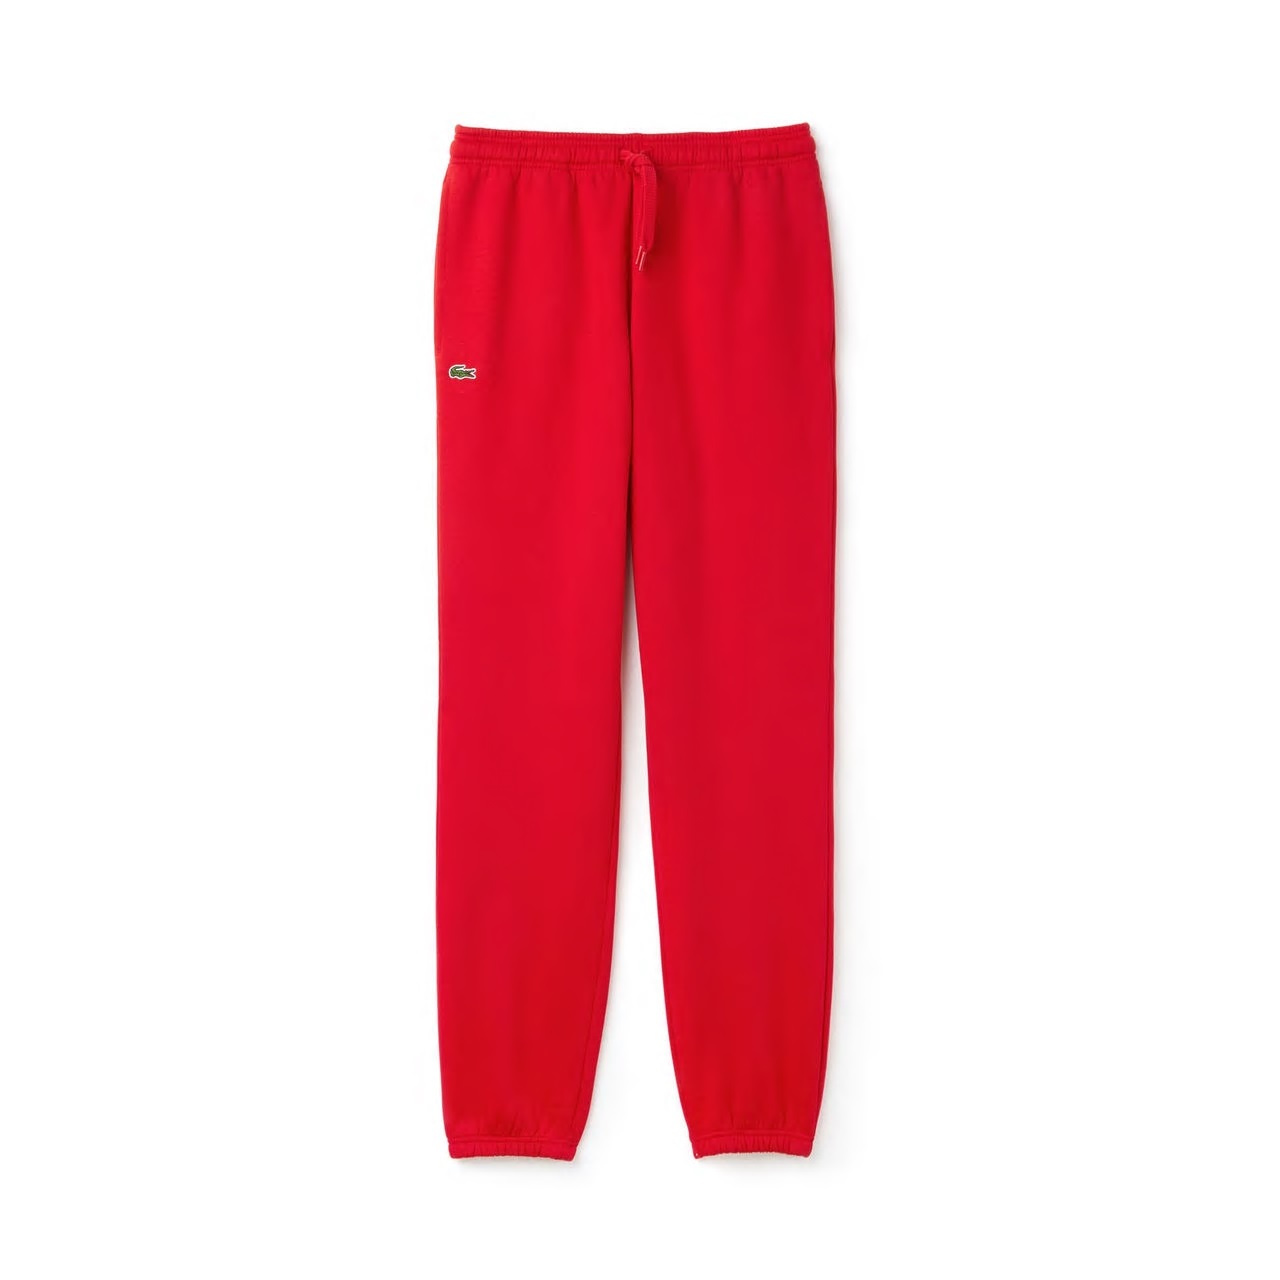 Lacoste Mens Sport Tennis Trackpants XH7611-51 sweatpants slacks pants ...